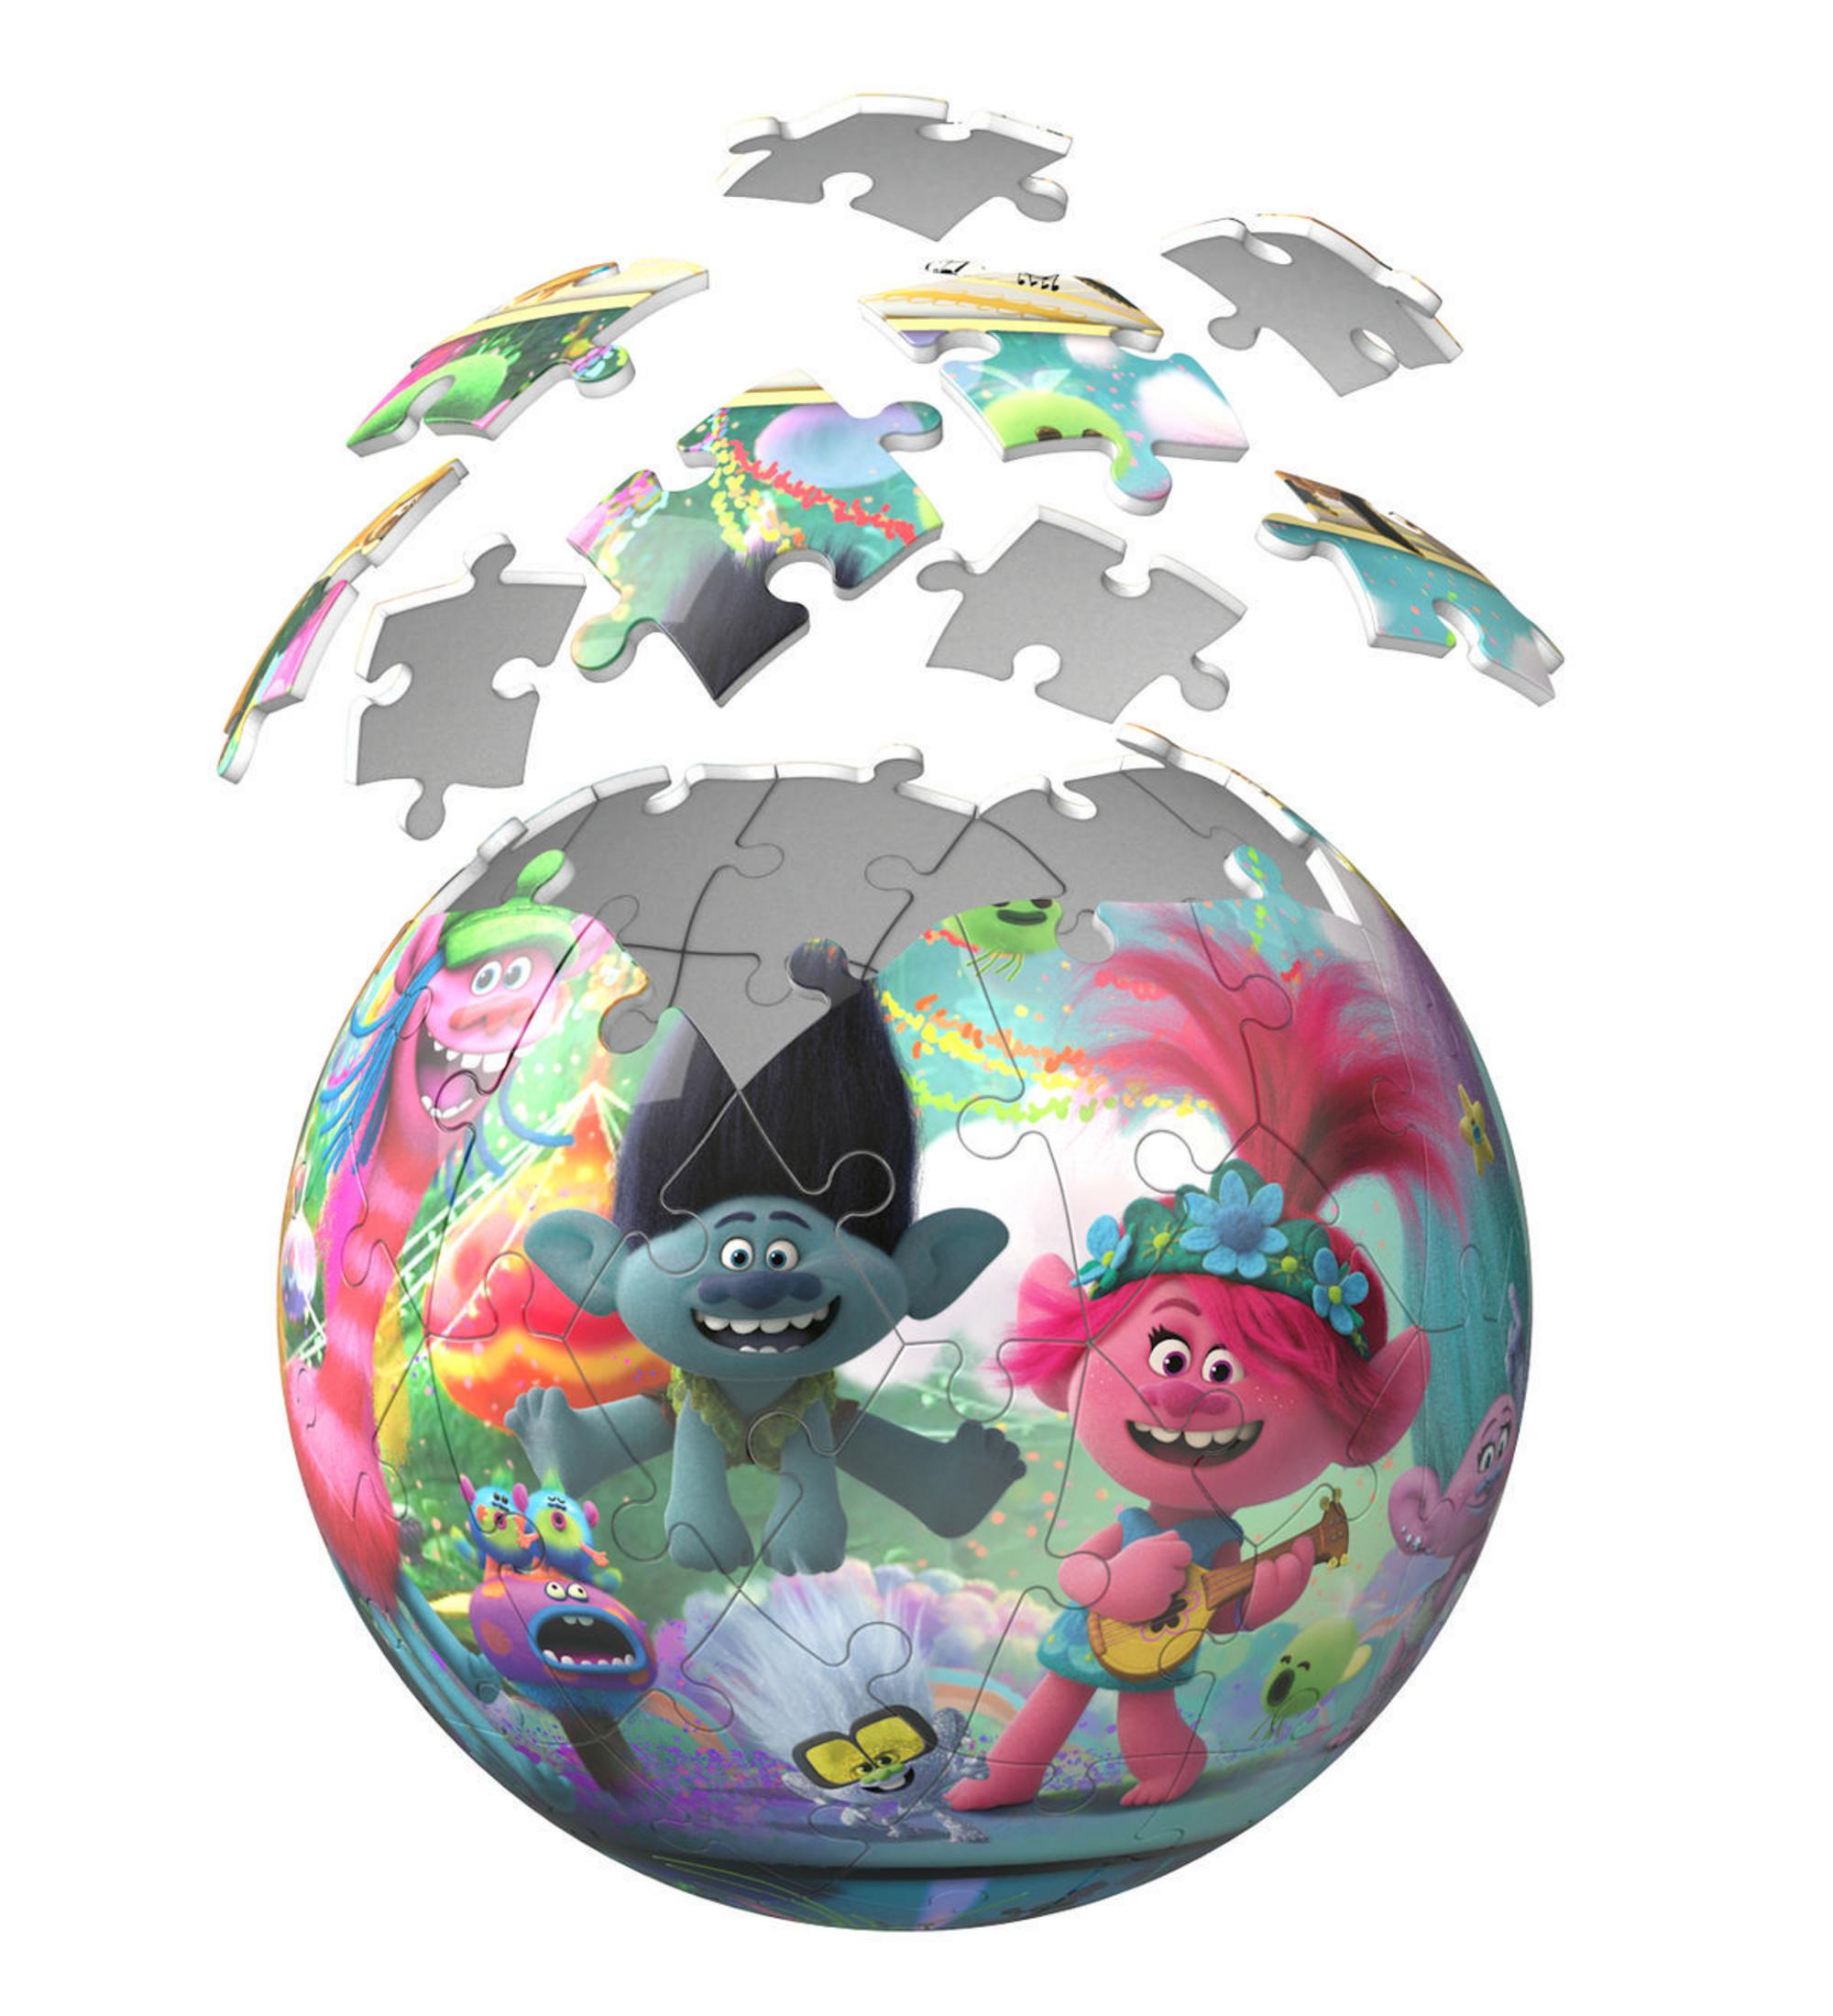 PUZZLE-BALL TOUR 3D Mehrfarbig 11169 WORLD Puzzle TROLLS RAVENSBURGER